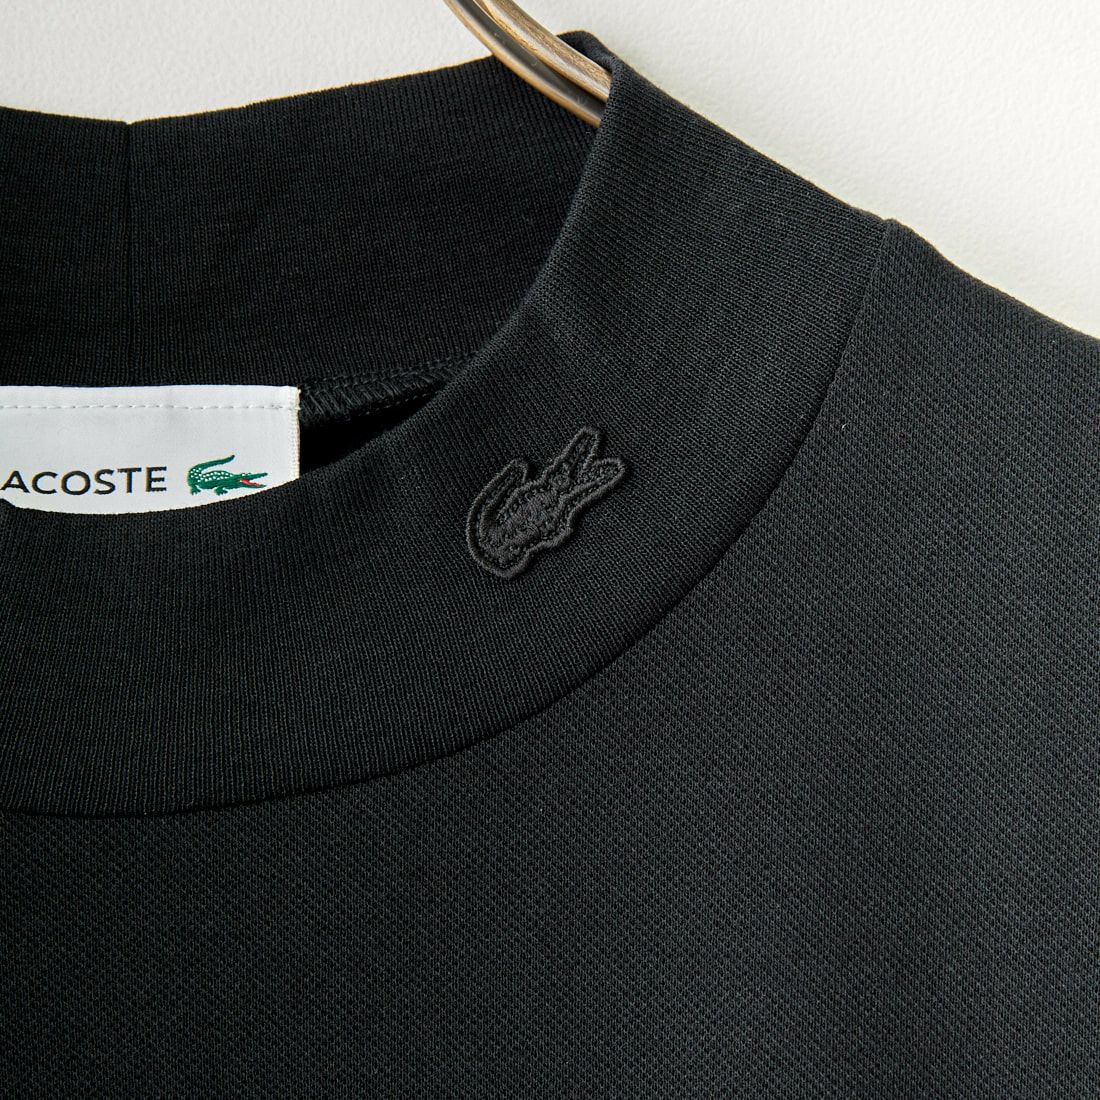 LACOSTE [ラコステ] 5分袖モックネックサマーニットTシャツ [TH079] 031 BLACK